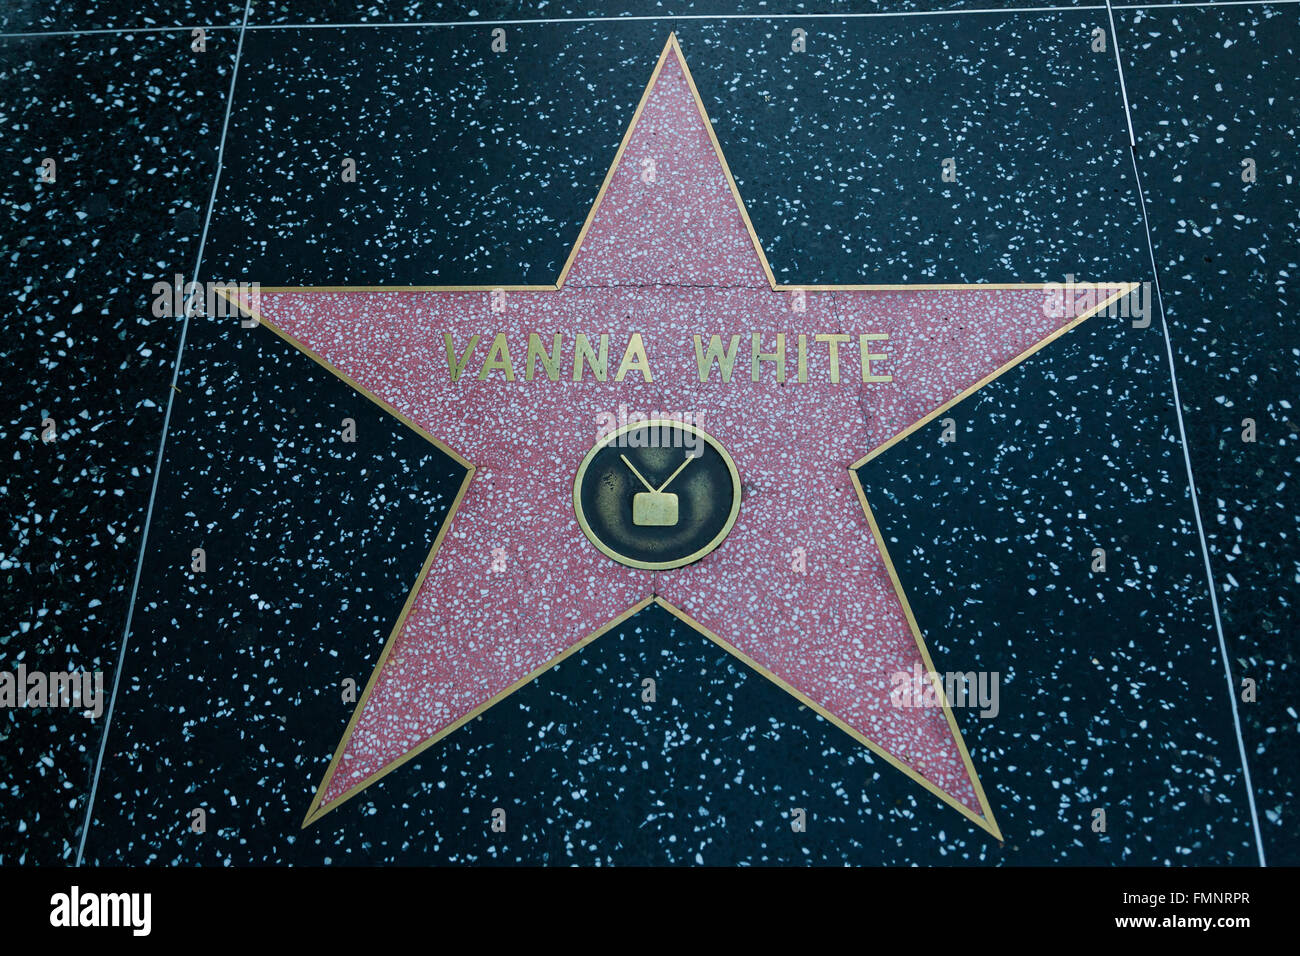 HOLLYWOOD, Kalifornien - 8. Februar 2015: Vanna White Hollywood Walk of Fame Star am 8. Februar 2015 in Hollywood, Kalifornien. Stockfoto